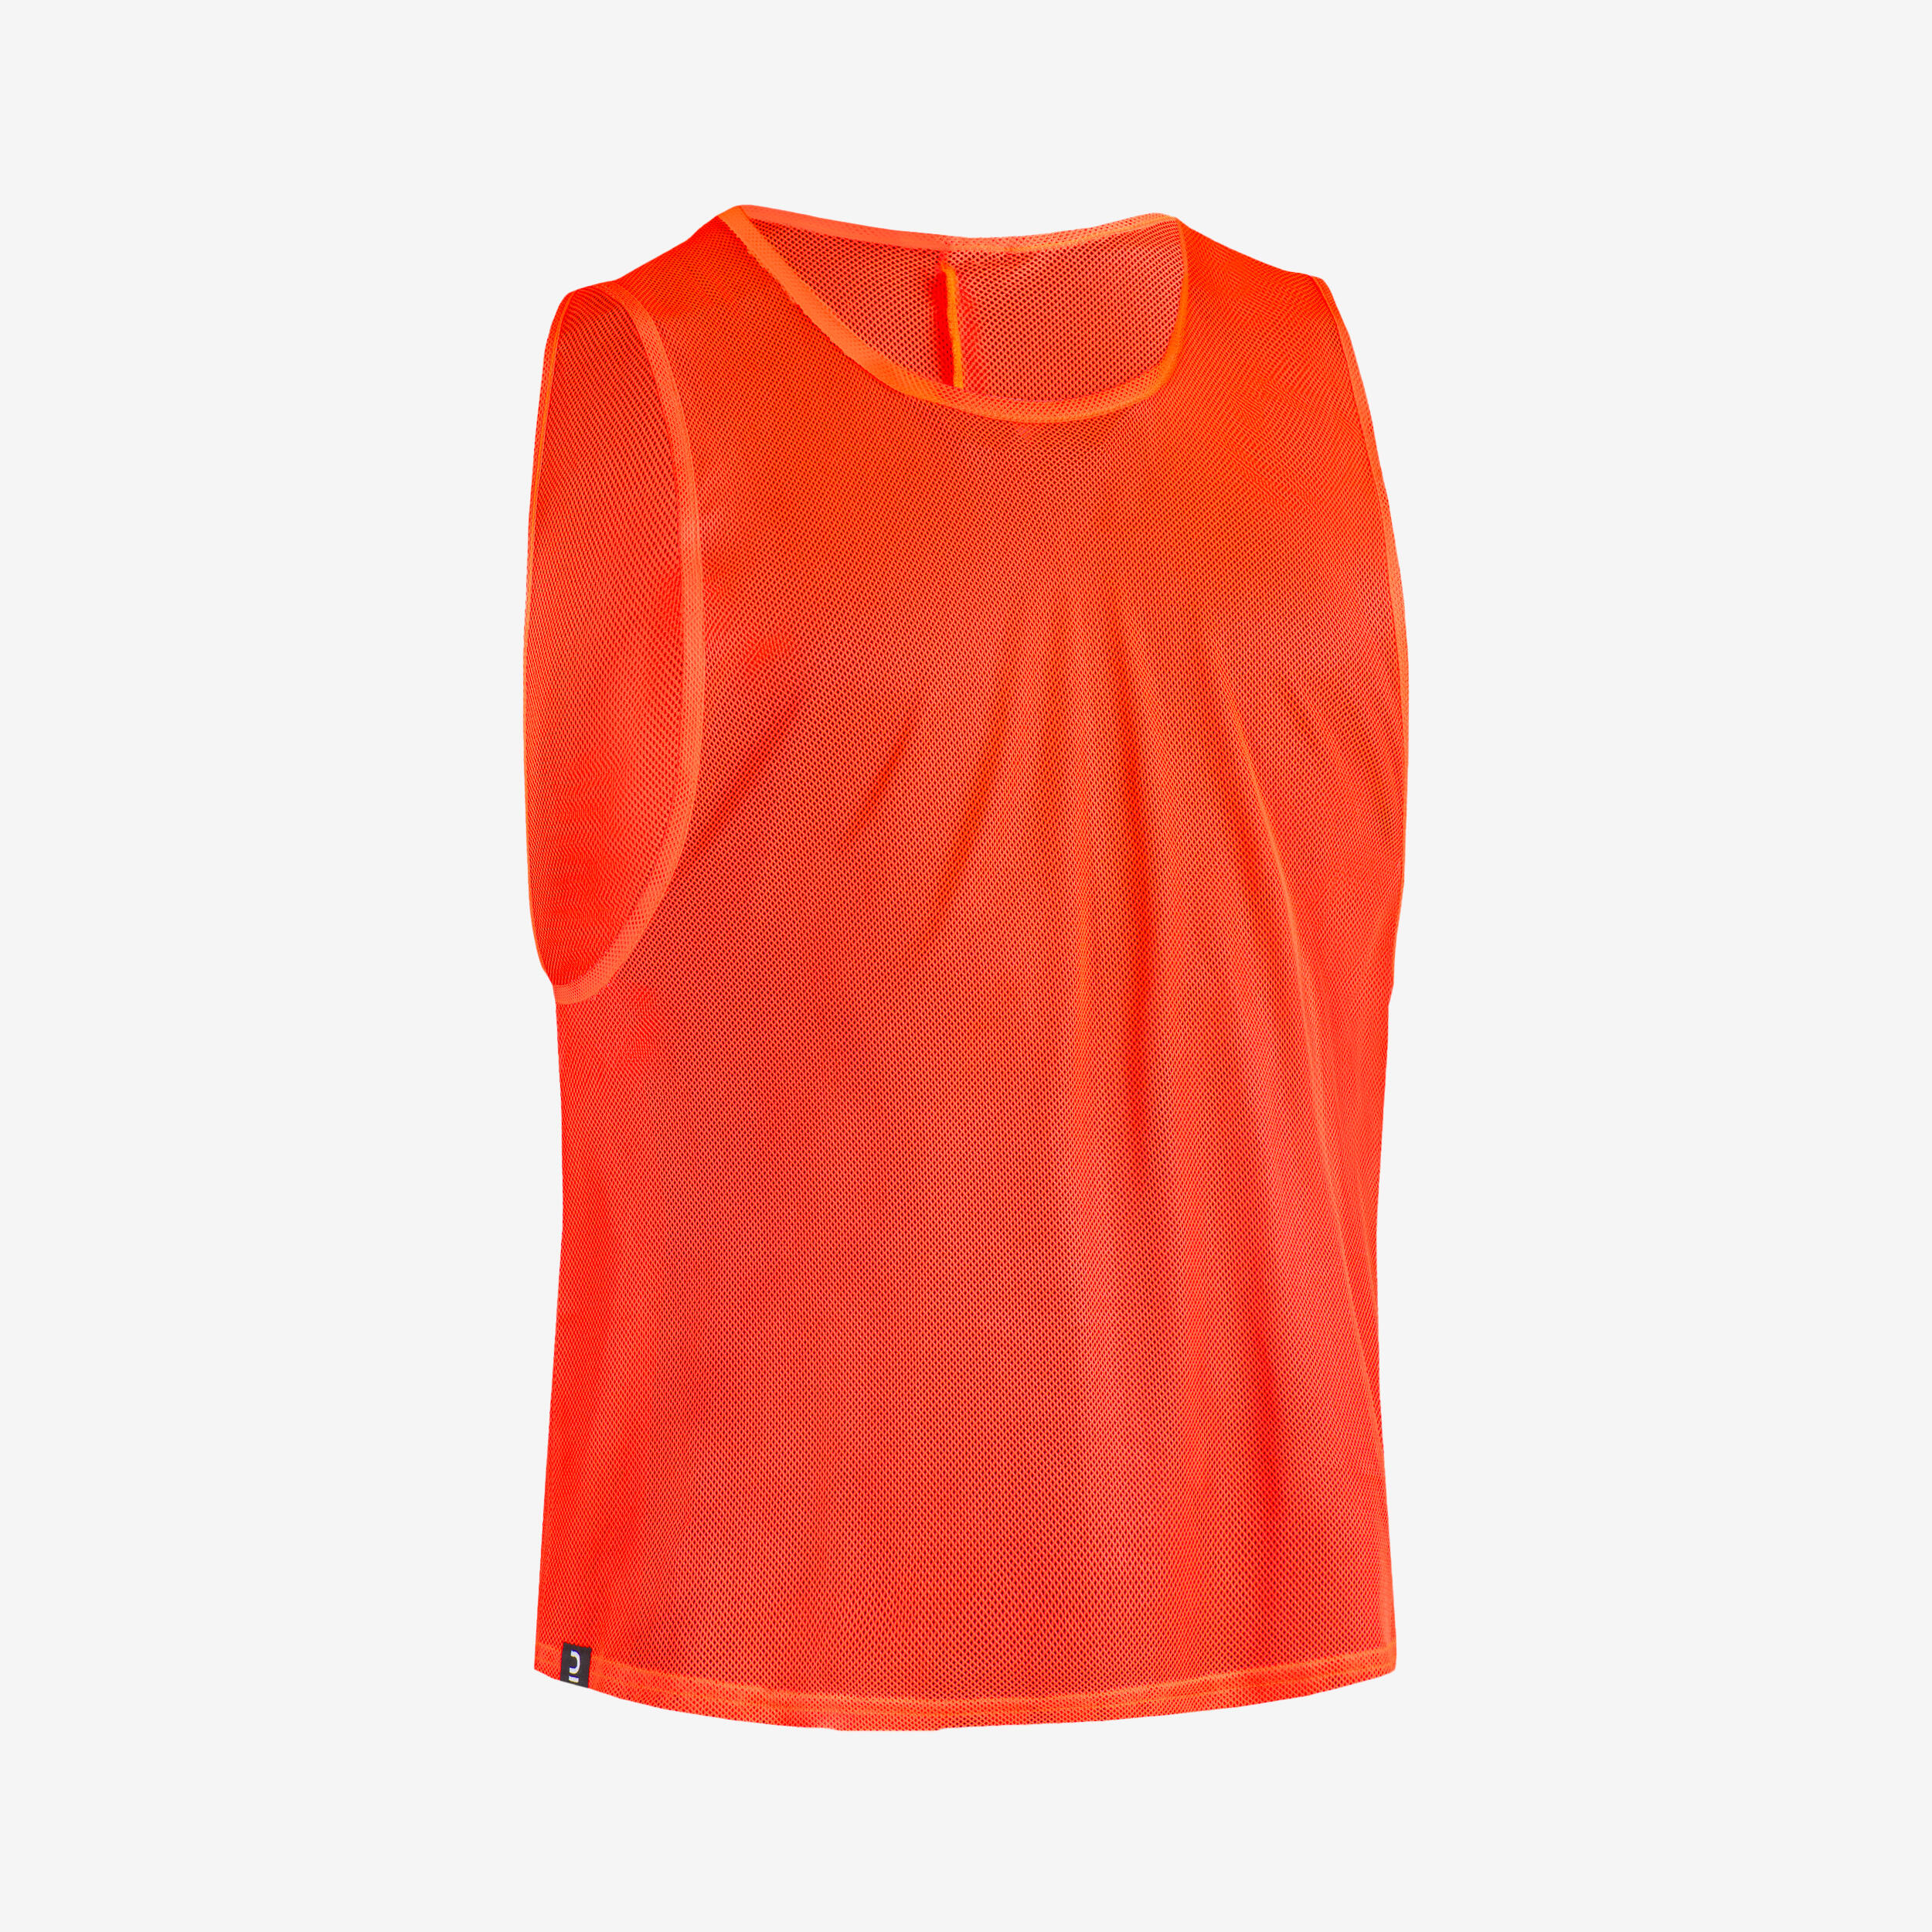 Sports Bib Adult - Neon Orange KIPSTA | Decathlon